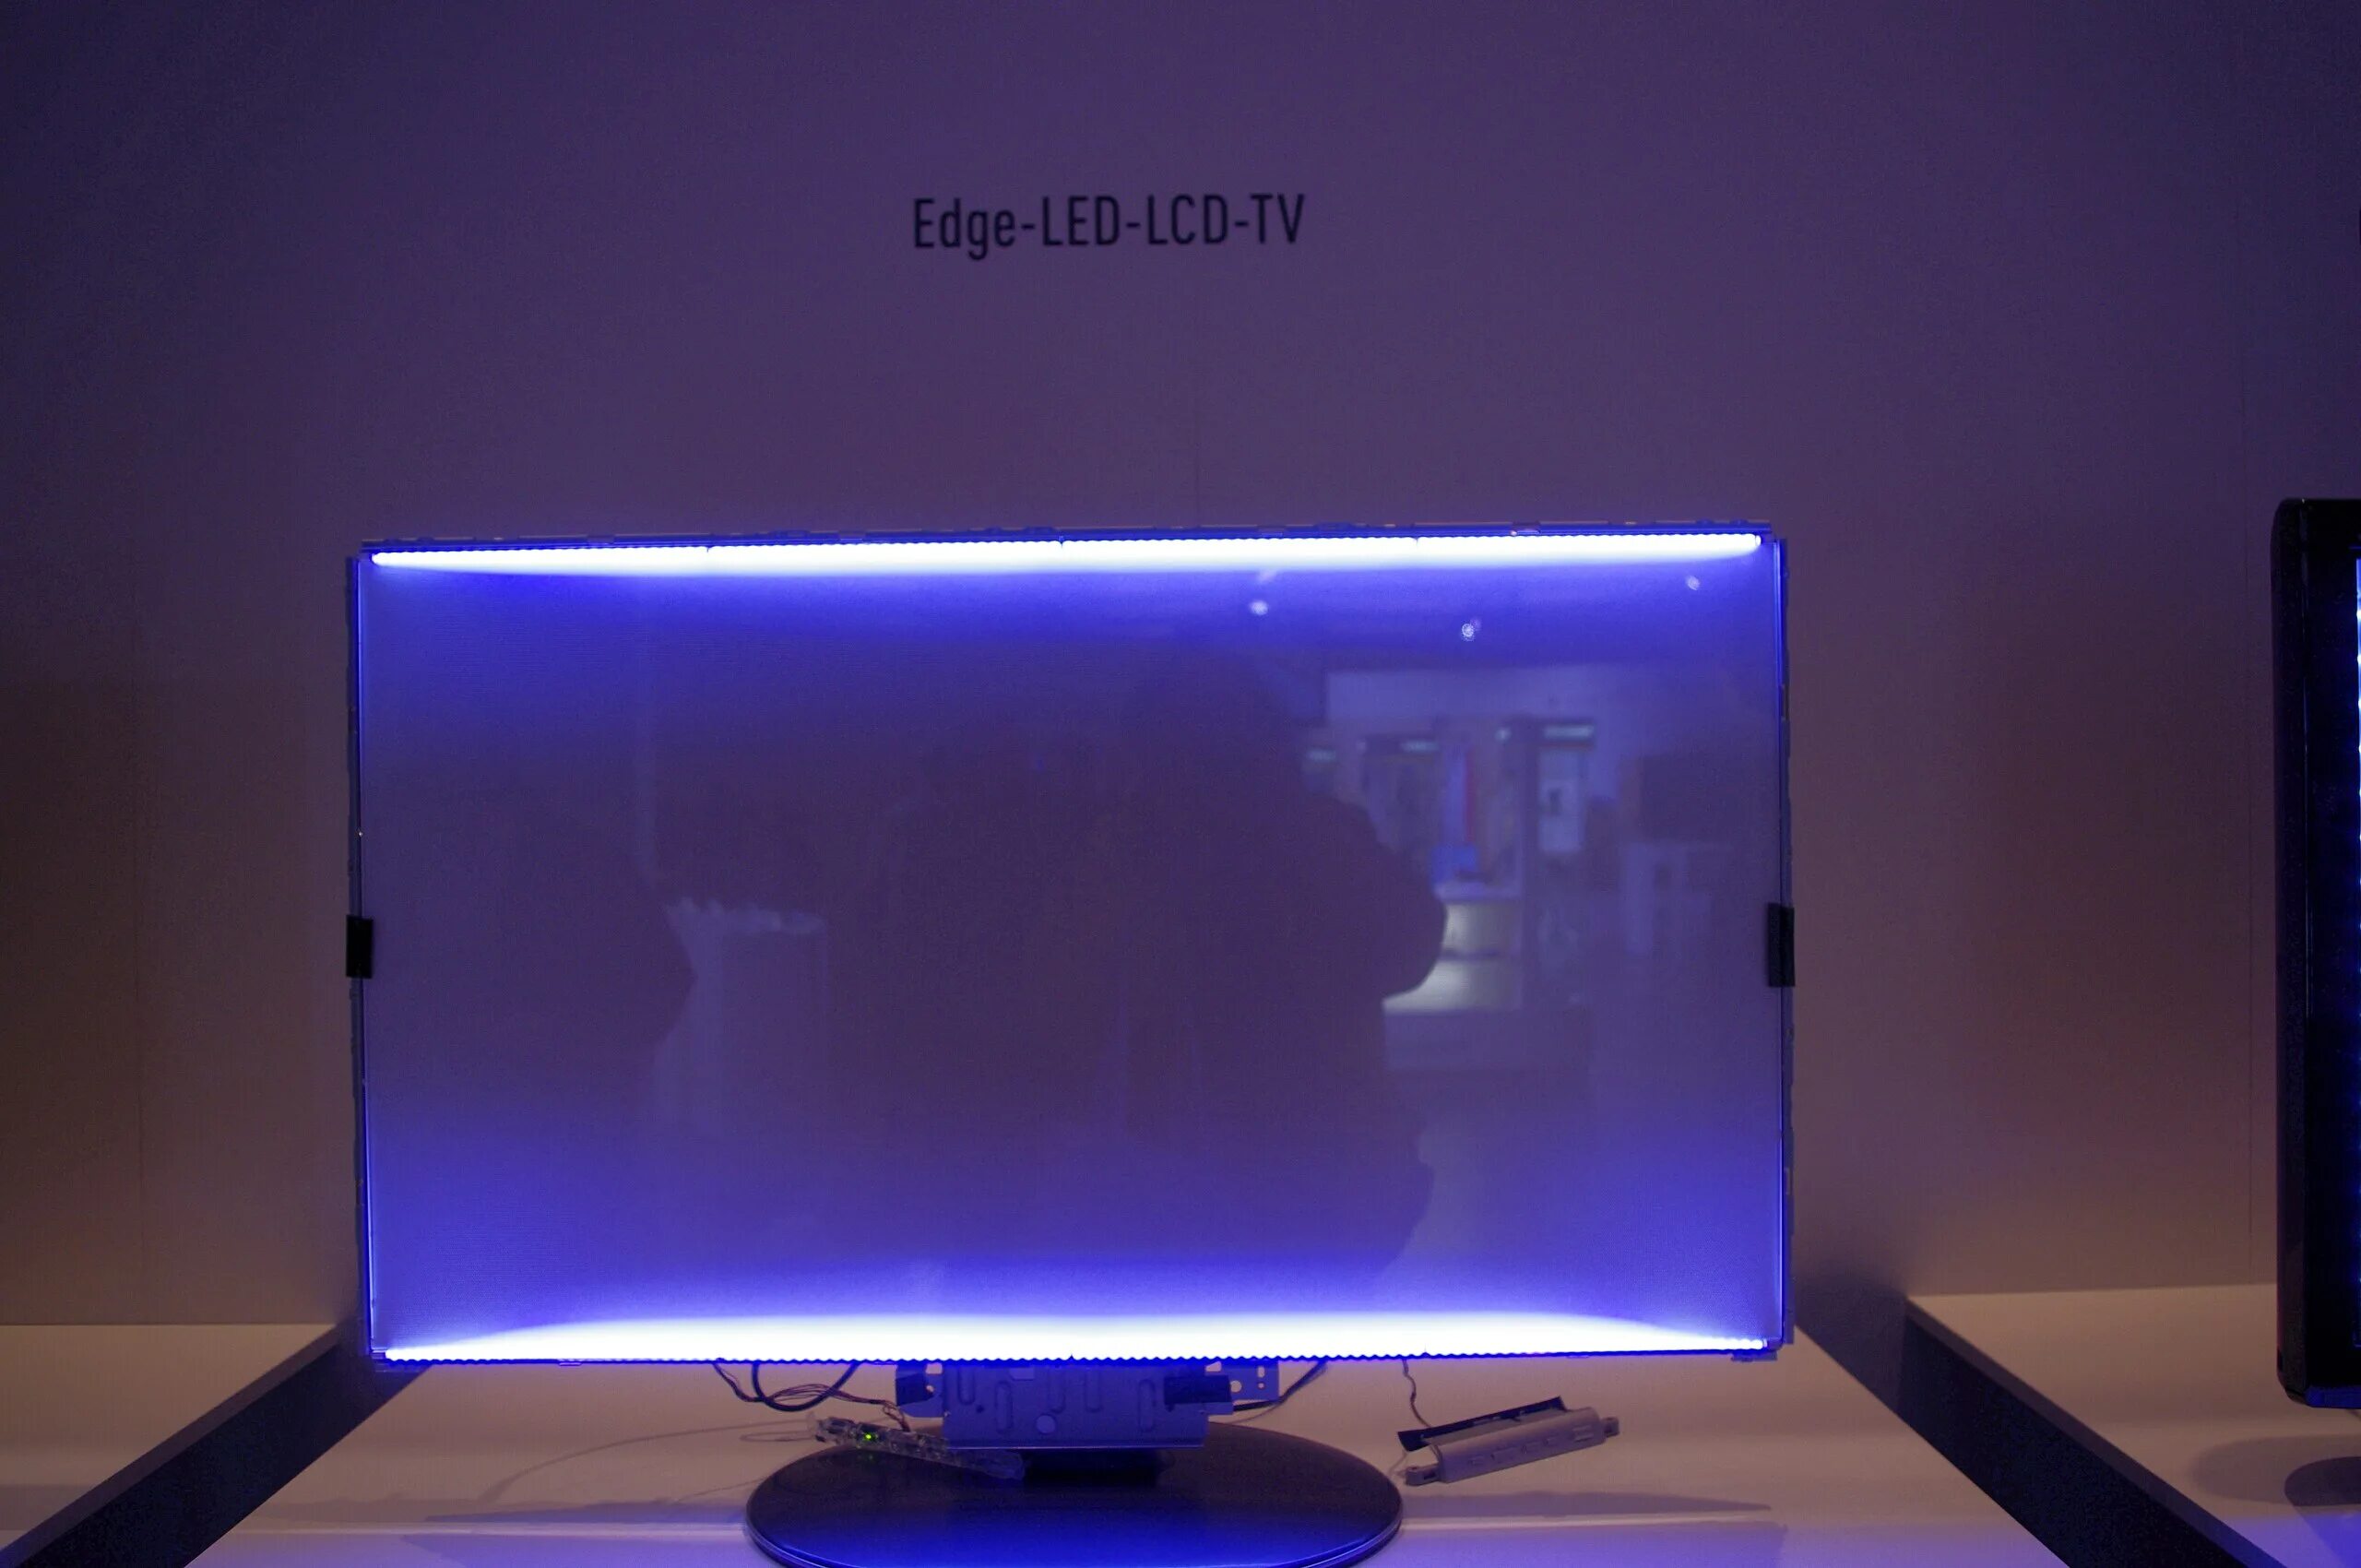 Подсветка жк экрана. Edge led подсветка Samsung. Подсветка Edge led что это такое в телевизоре. Тип светодиодной подсветки: Edge led. Подсветка direct led что это такое в телевизоре.